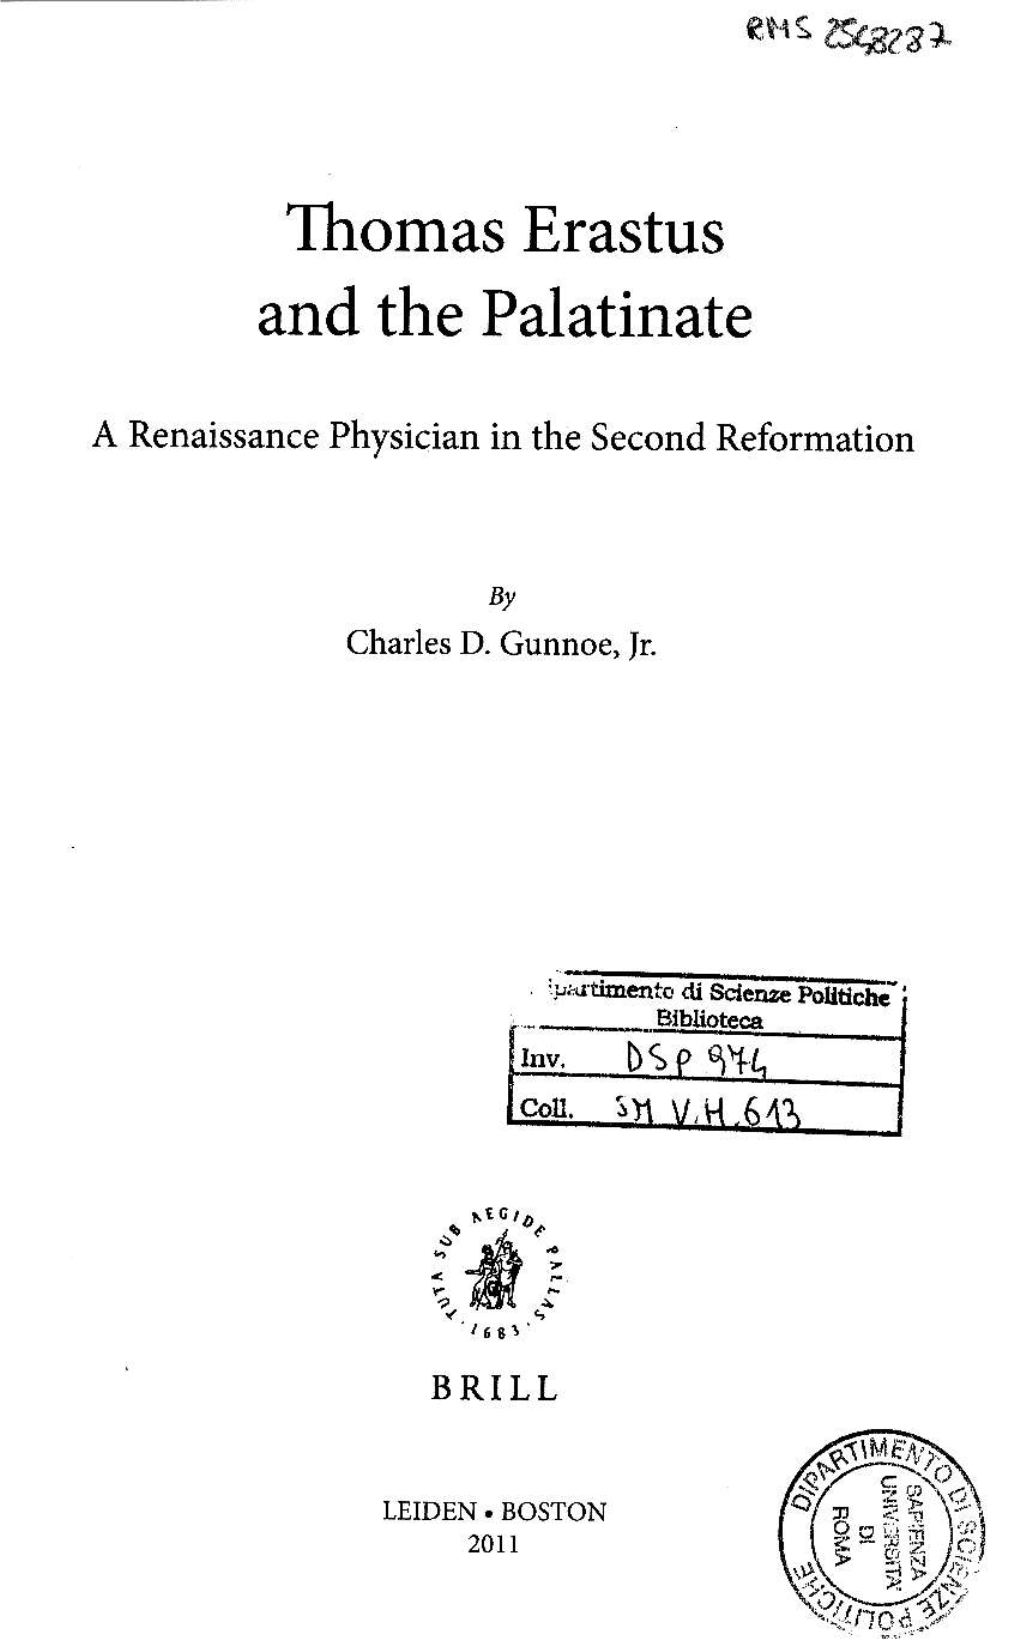 Thomas Erastus and the Palatinate